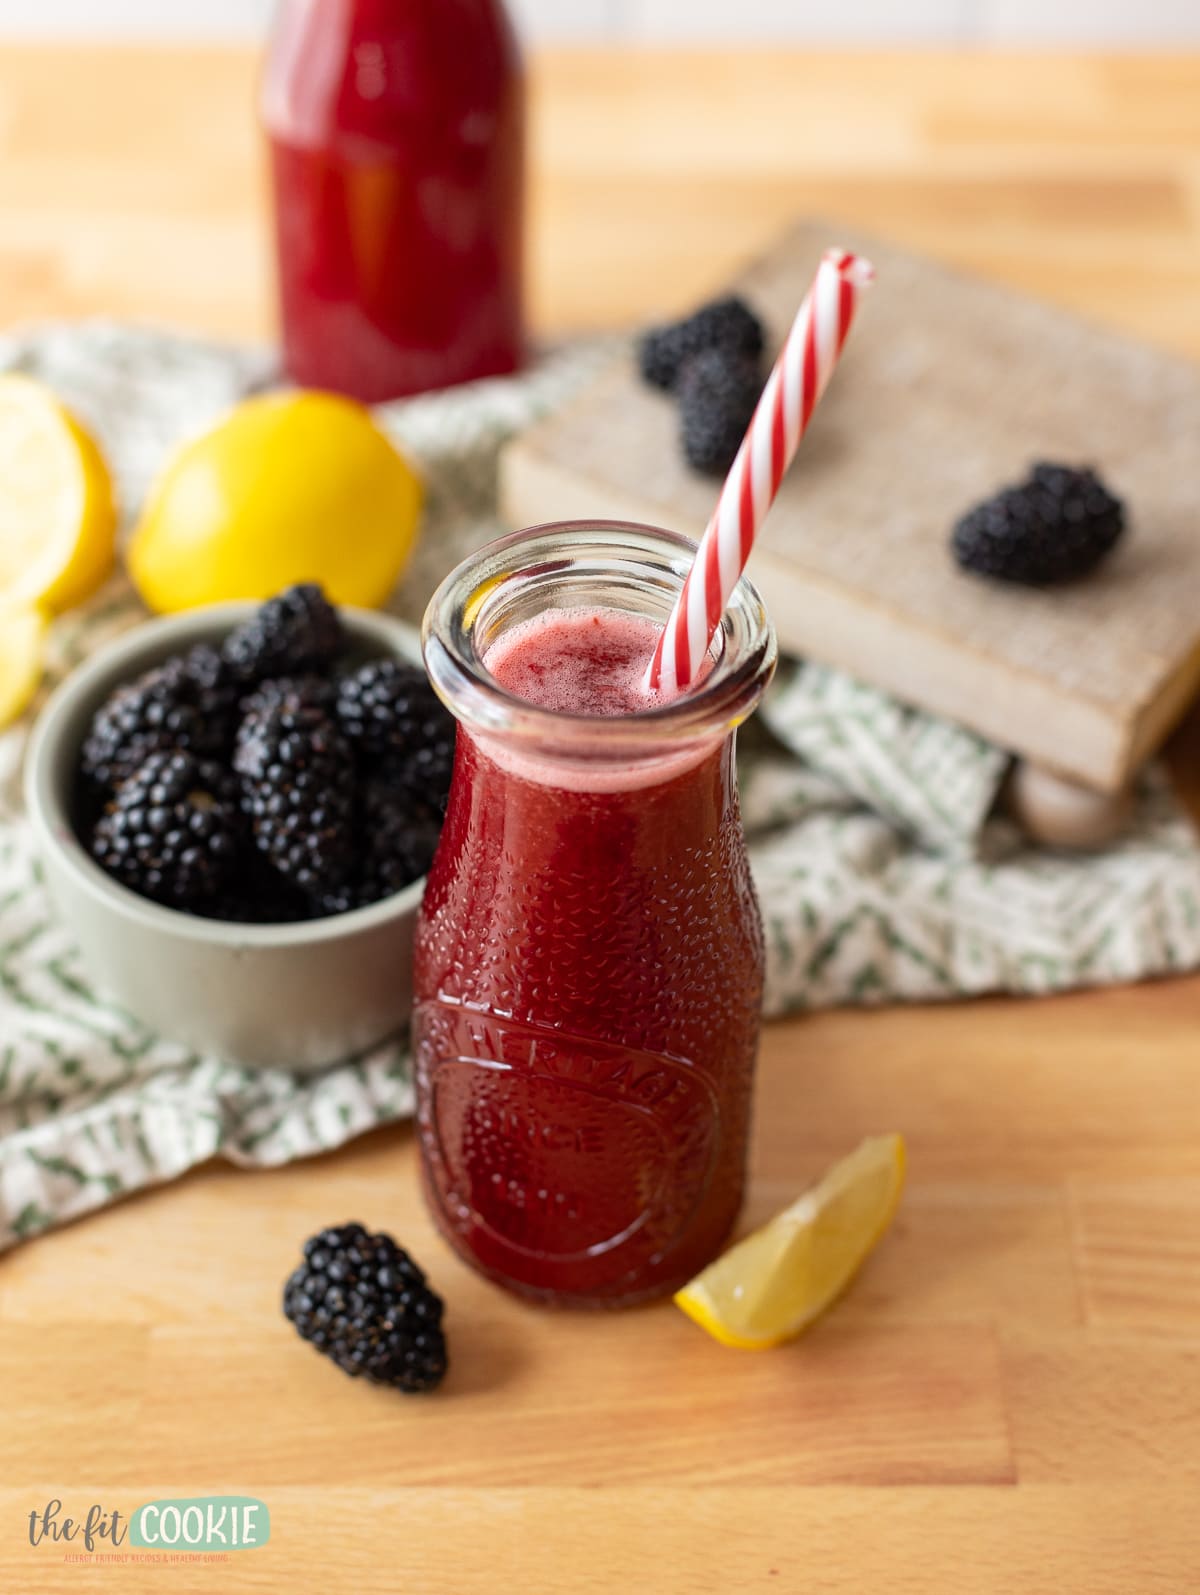 A refreshing glass of blackberry lemonade, garnished with lemon slices and juicy blackberries.